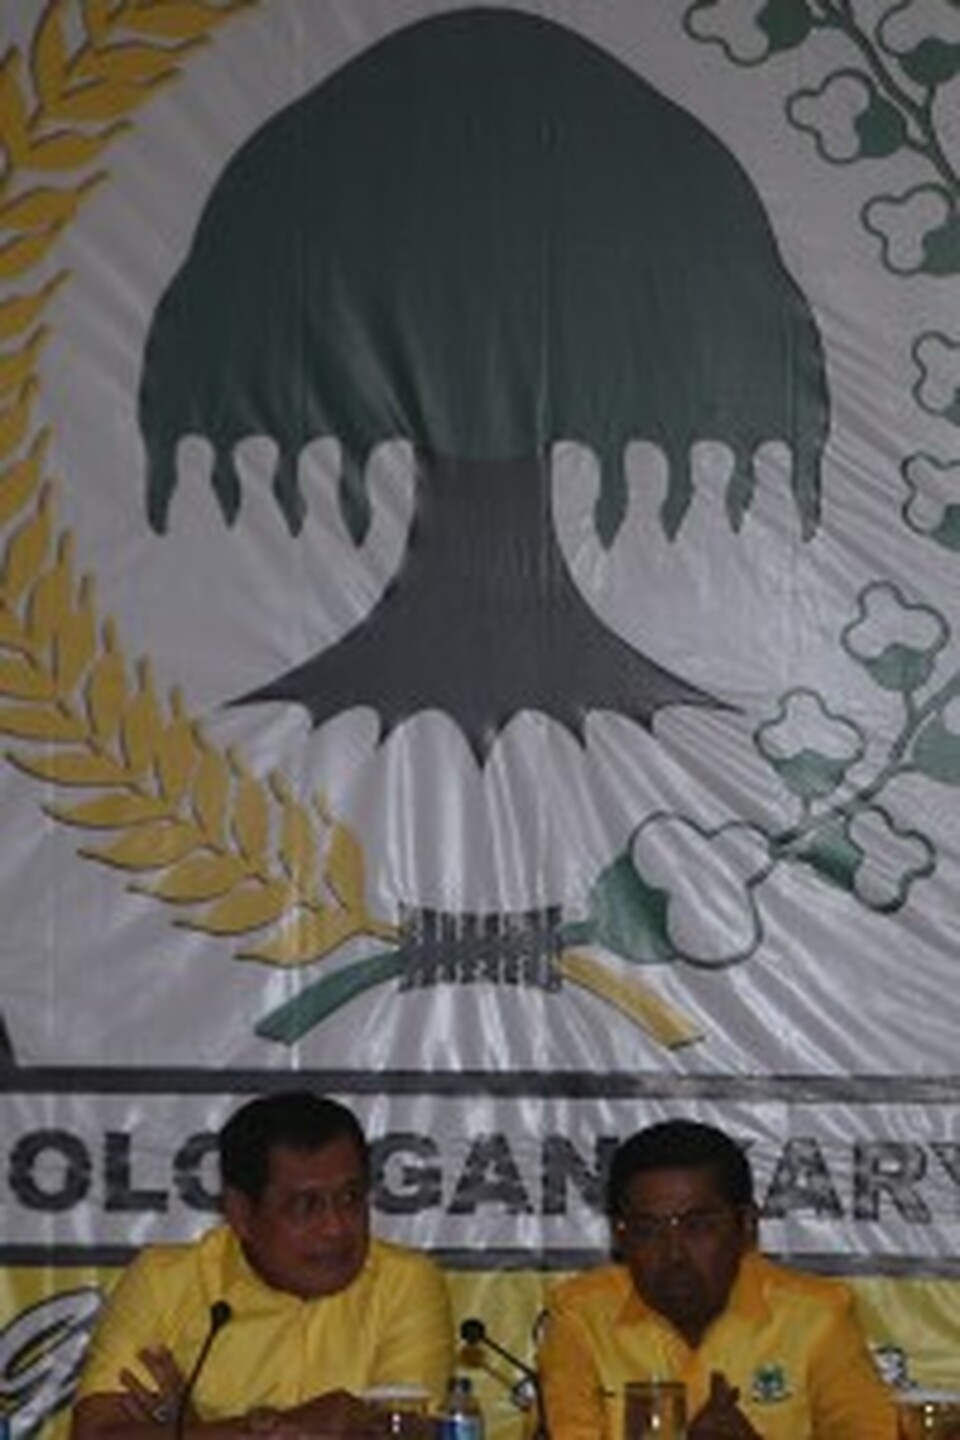  Golkar leader Nurdin Halid (left) leads the party's plenary session on Tuesday (21/11), accompanied by Secretary General (Photo by ANTARA FOTO/Sigid Kurniawan/aww/17)
